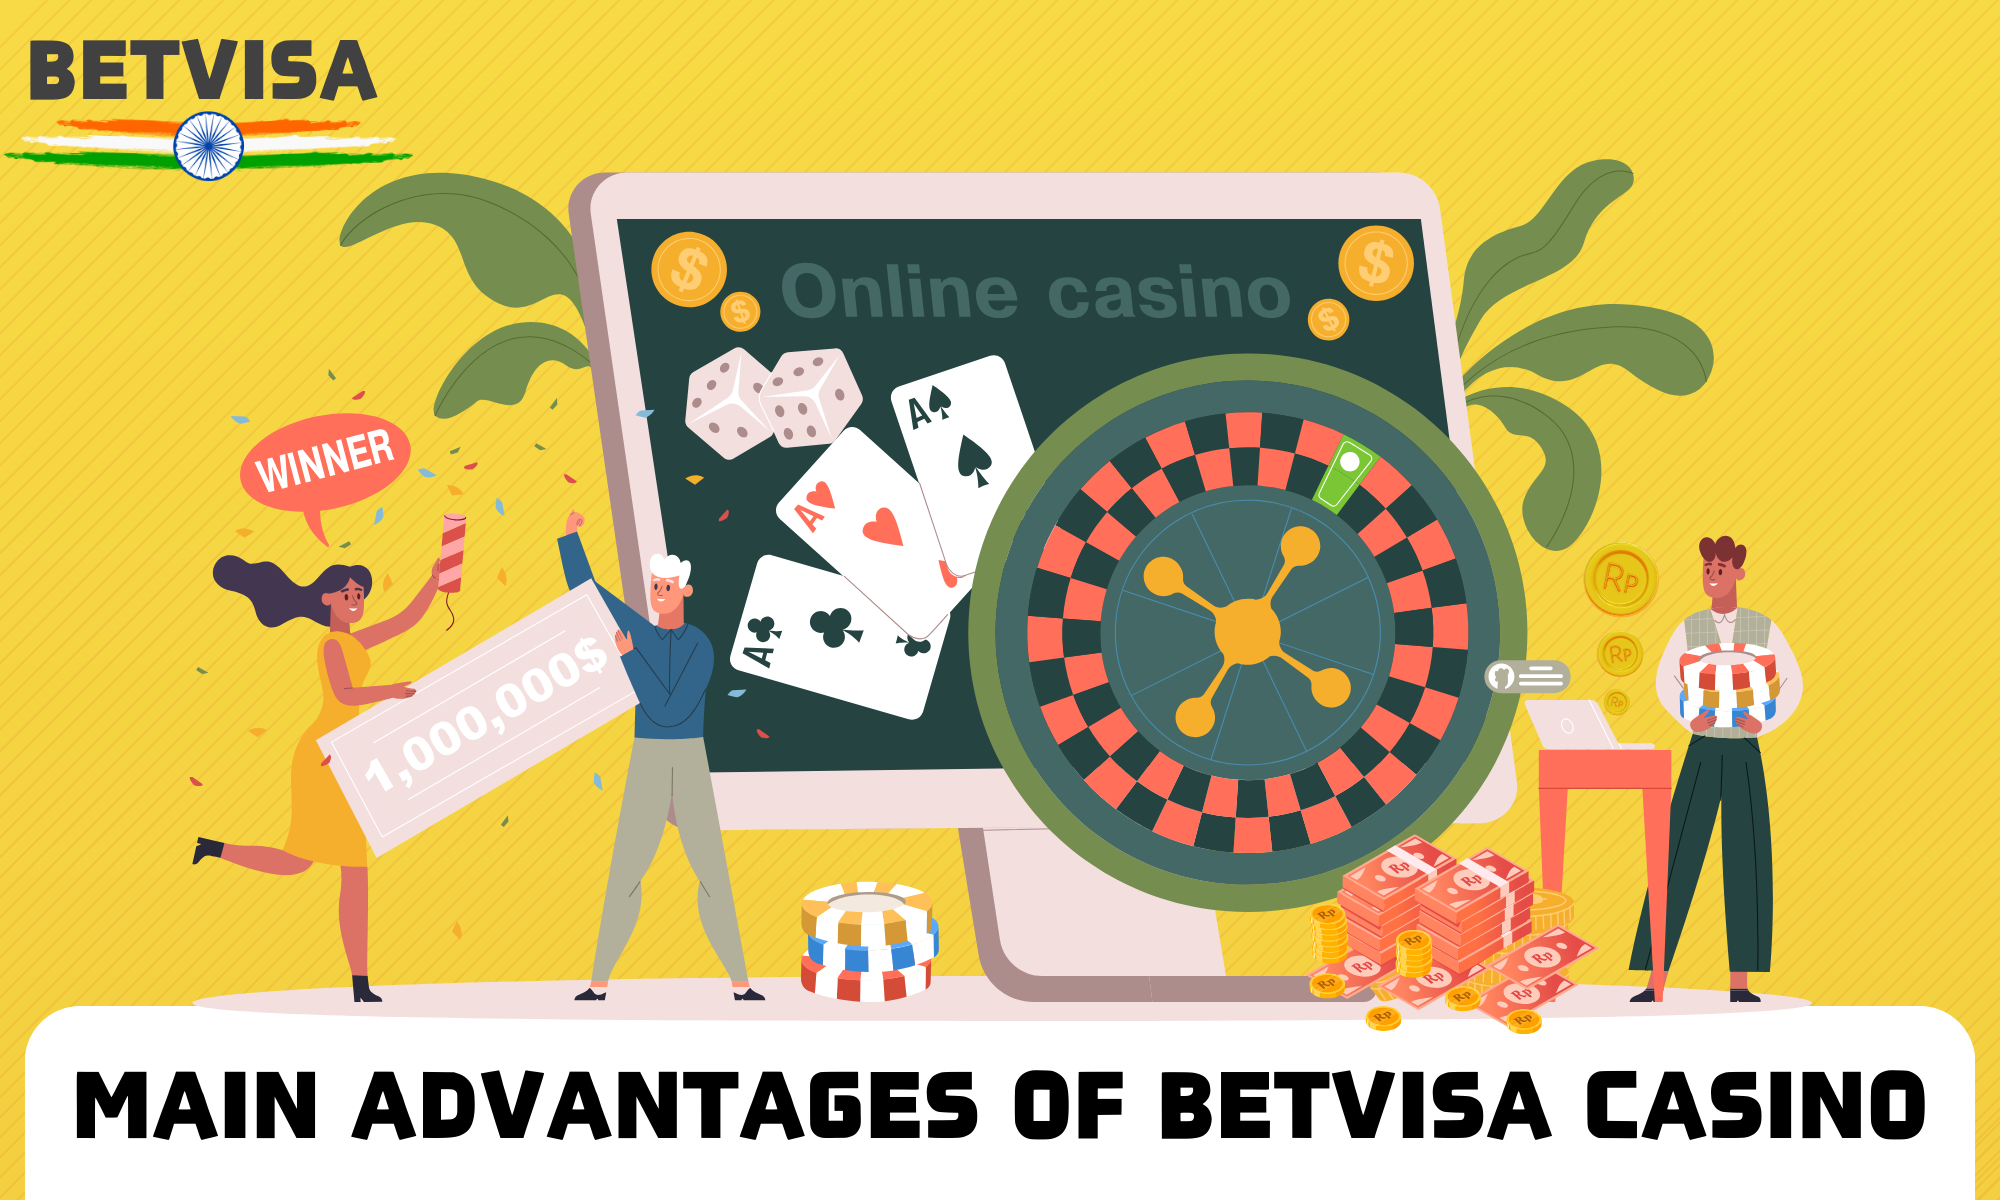 List of advantages of Betvisa casino